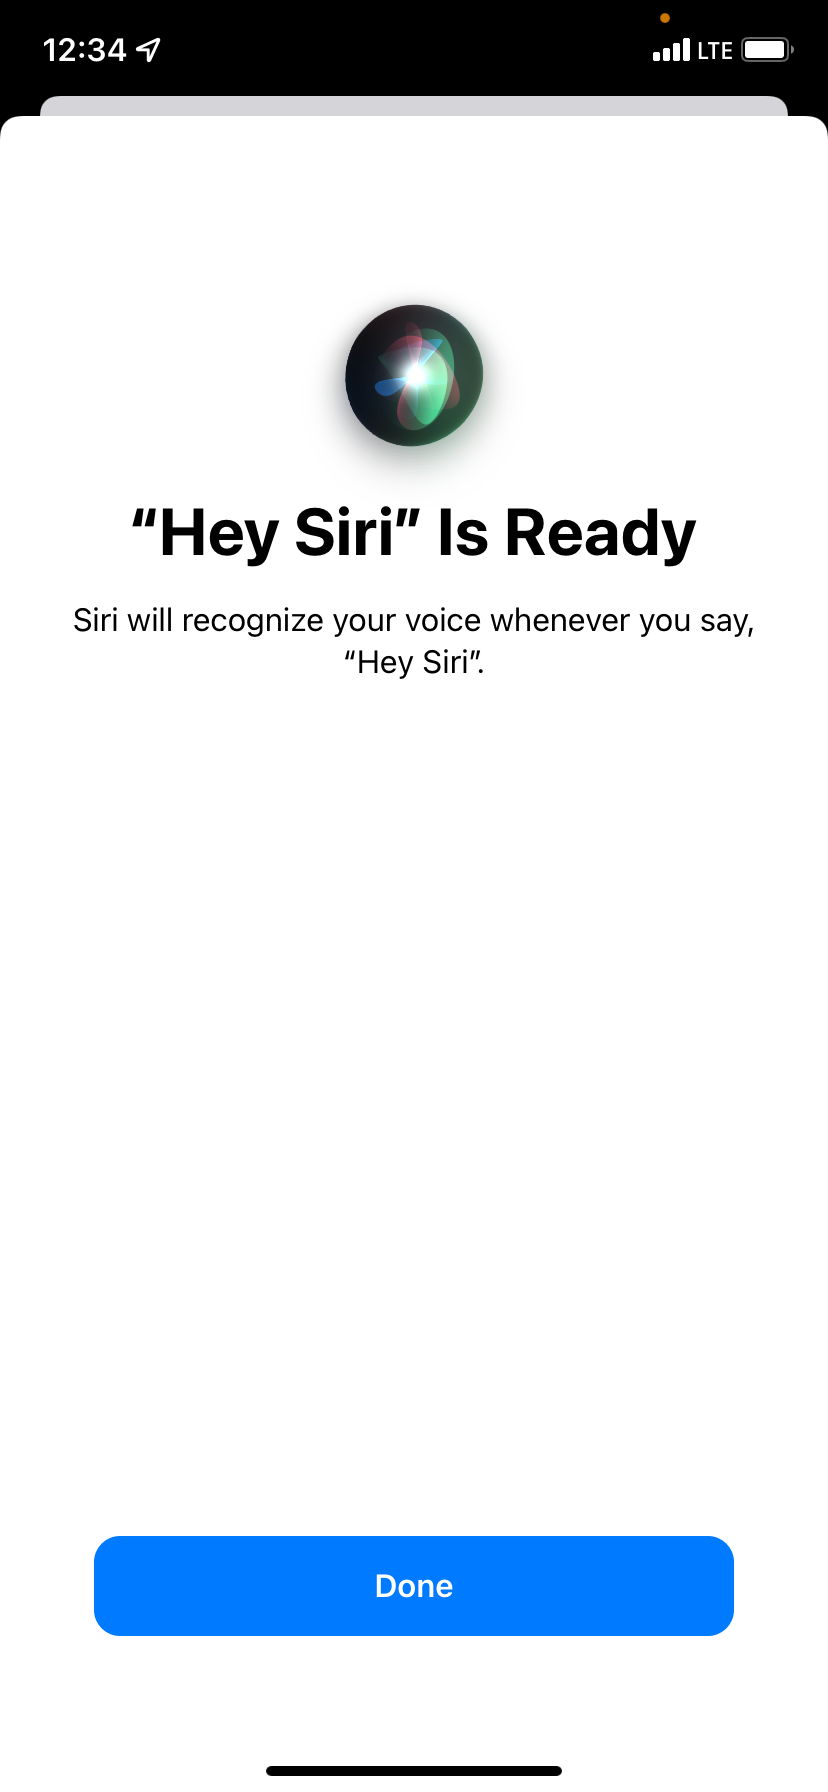 "Hey Siri" successful setup screen on iPhone